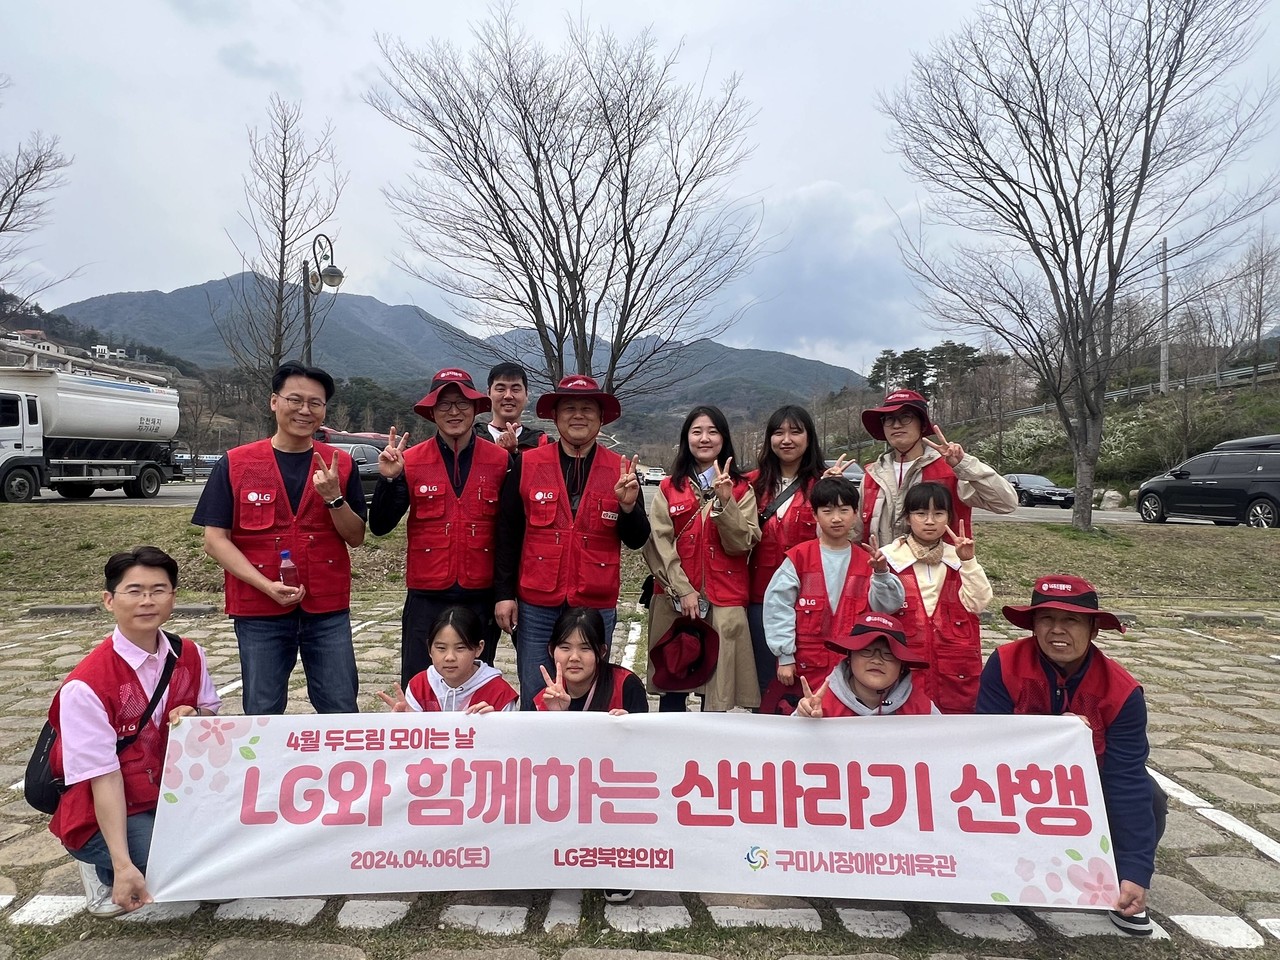 LG경북협의회 두드림봉사단이 지난 6일 구미시장애인종합복지관 회원들이 참가한 가운데 경남 합천에서 “LG와 함께하는 산바라기 산행” 봉사활동을 실시했다.